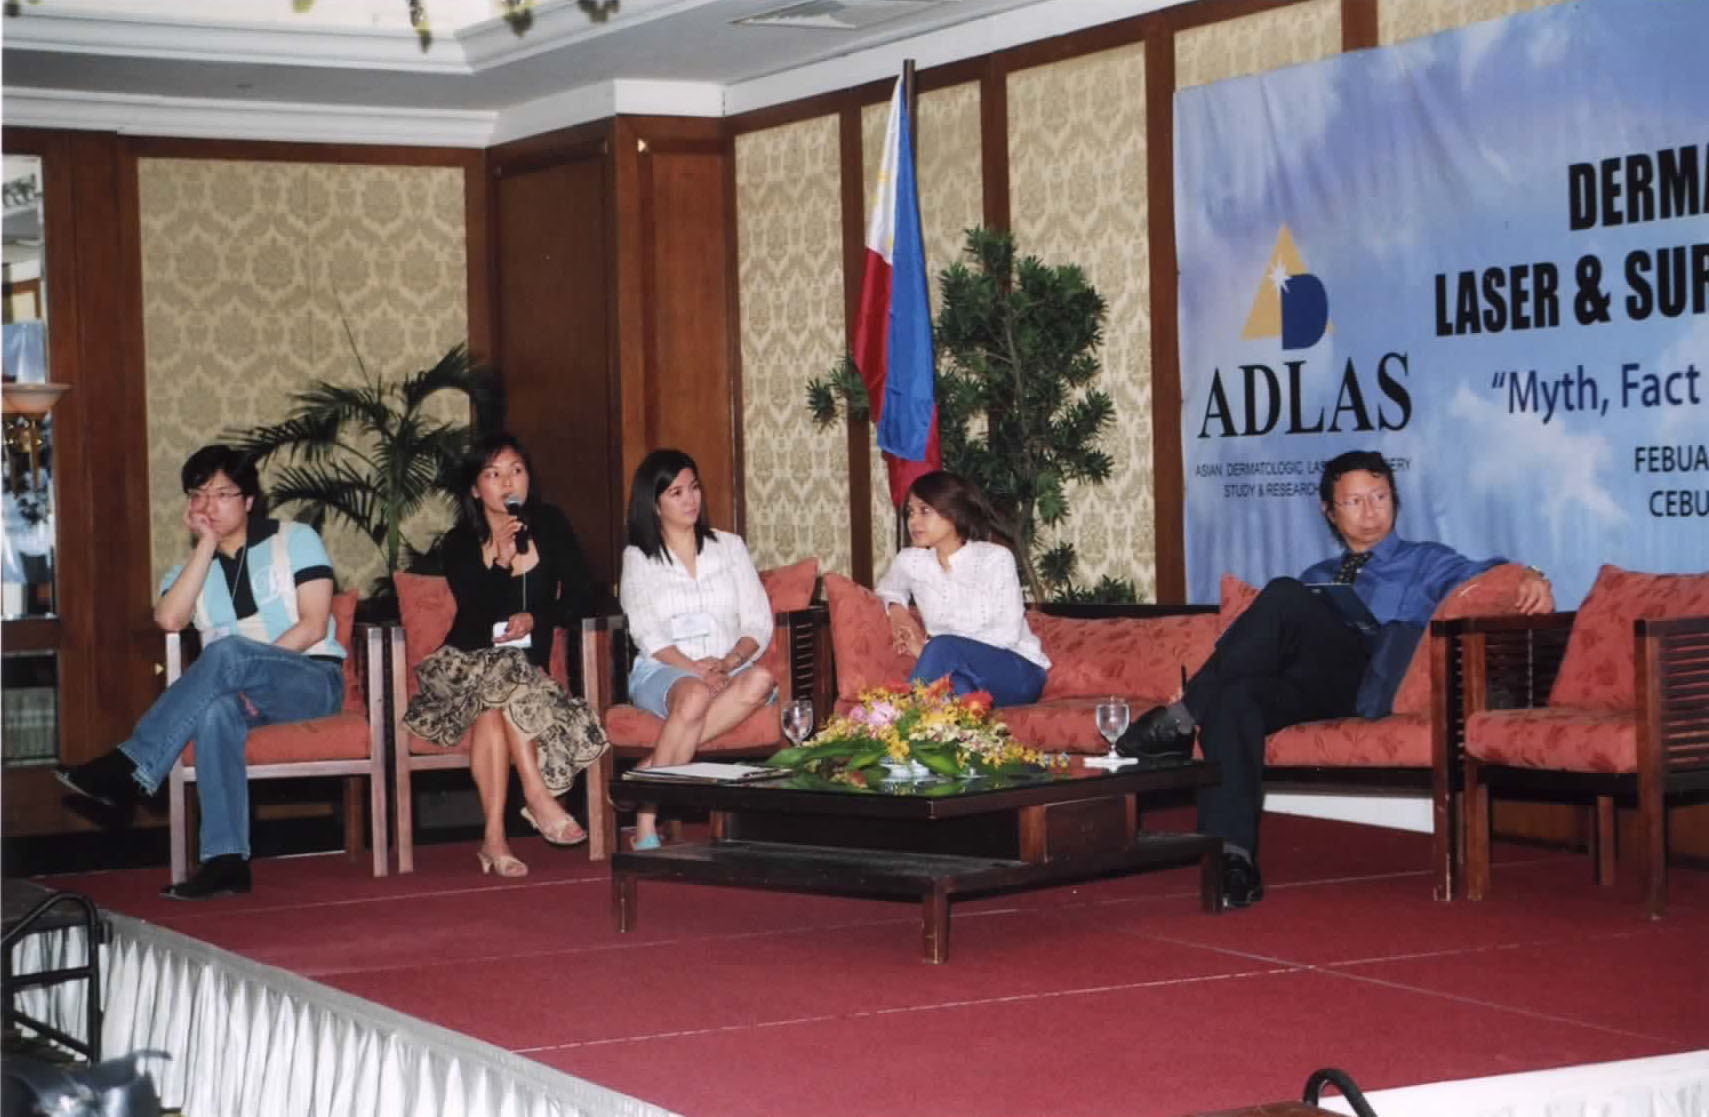 2005 -Cebu - Asian Dermatologic Lasers And Surgery Conference